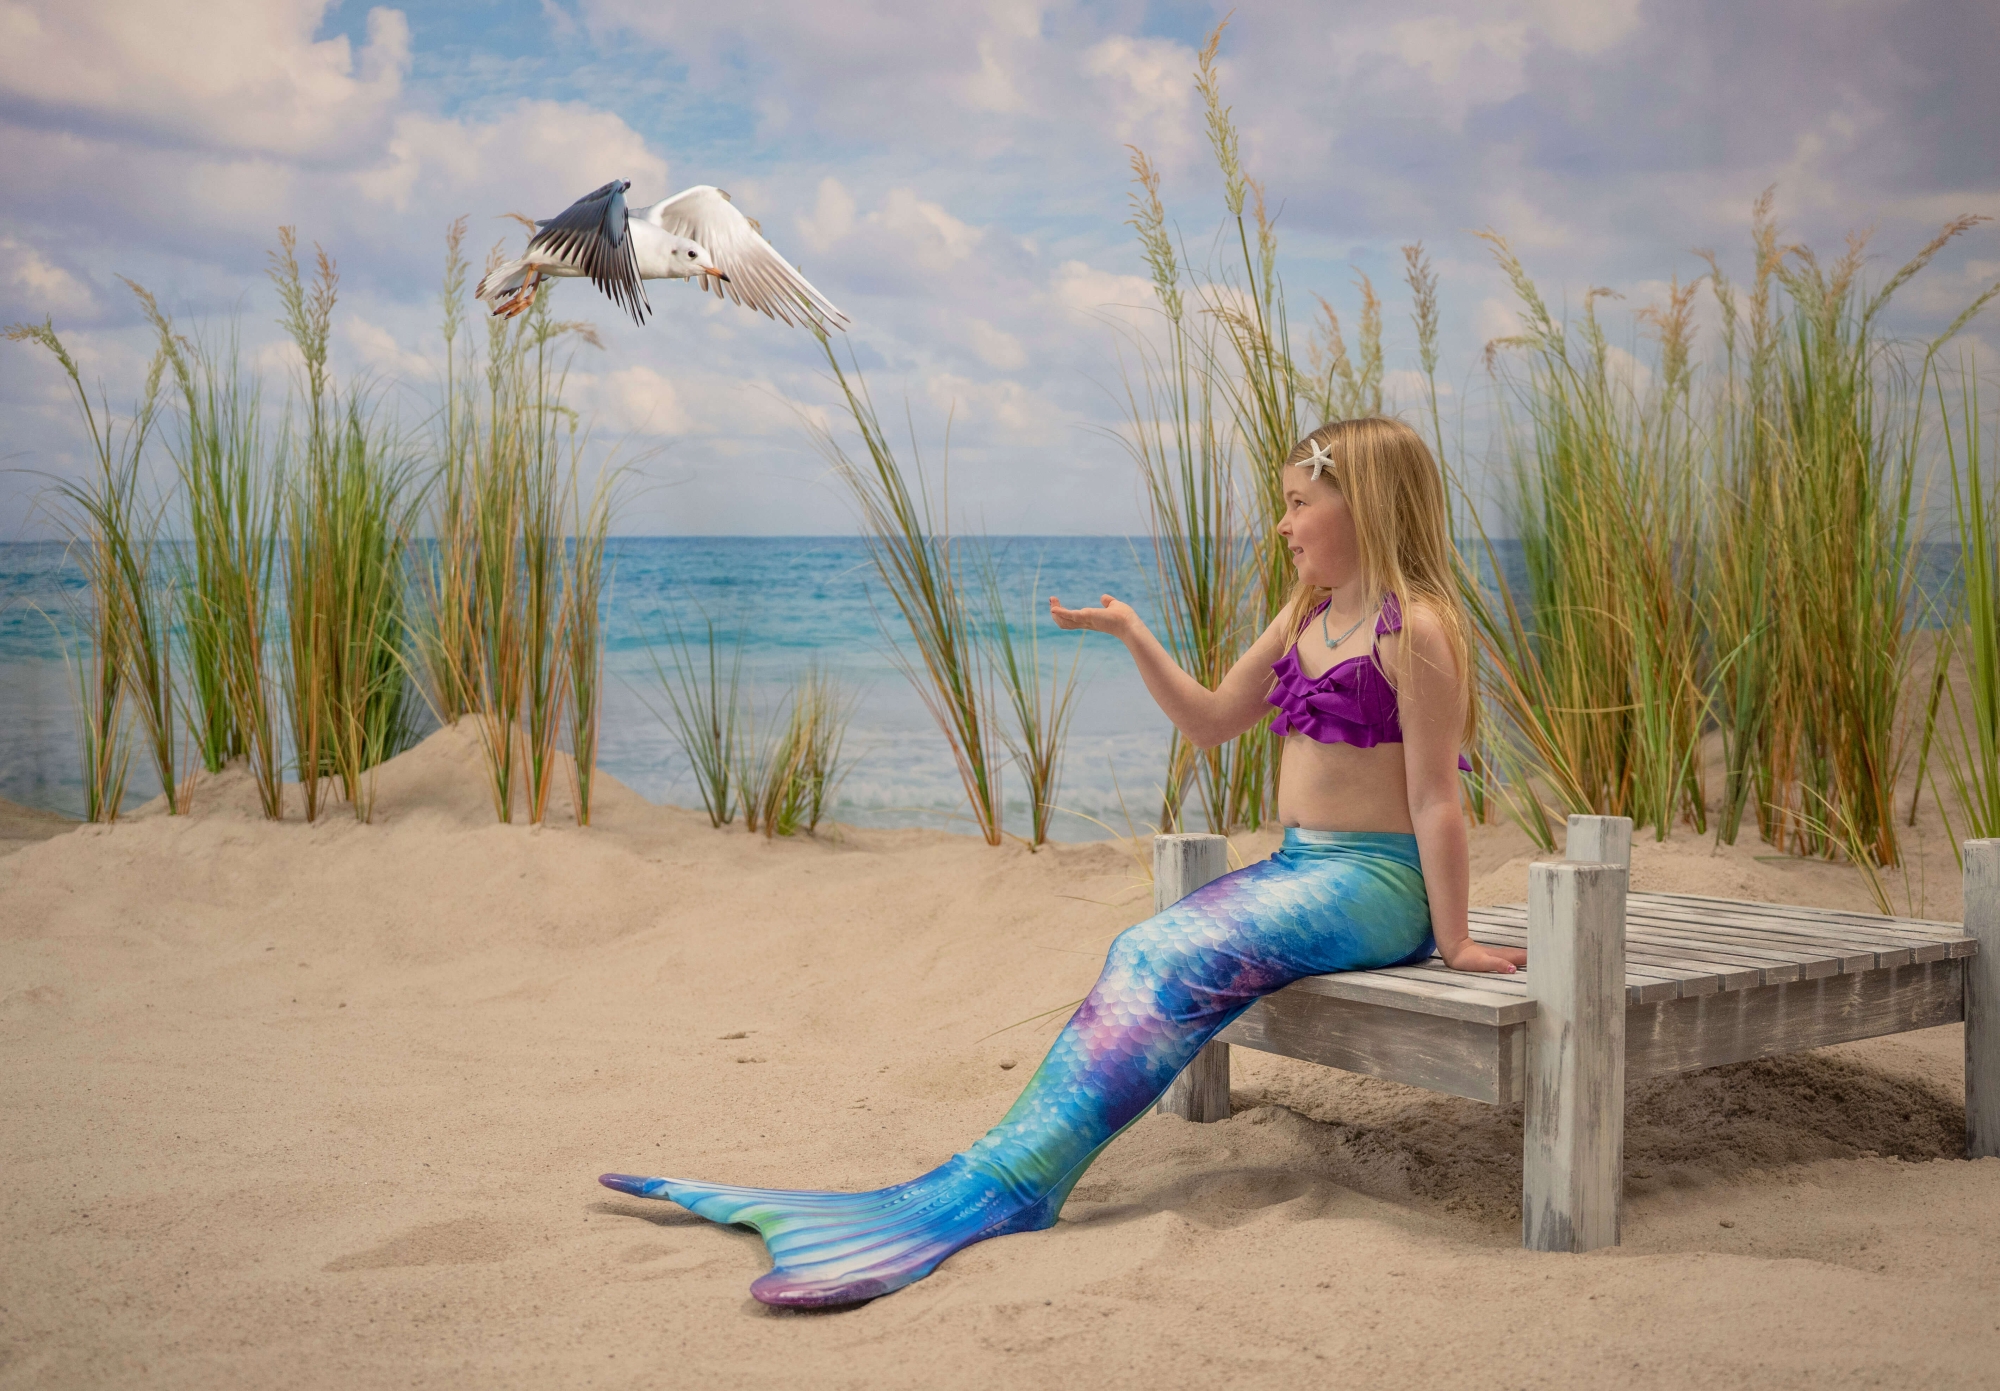 Mermaid Experience and Photoshoot